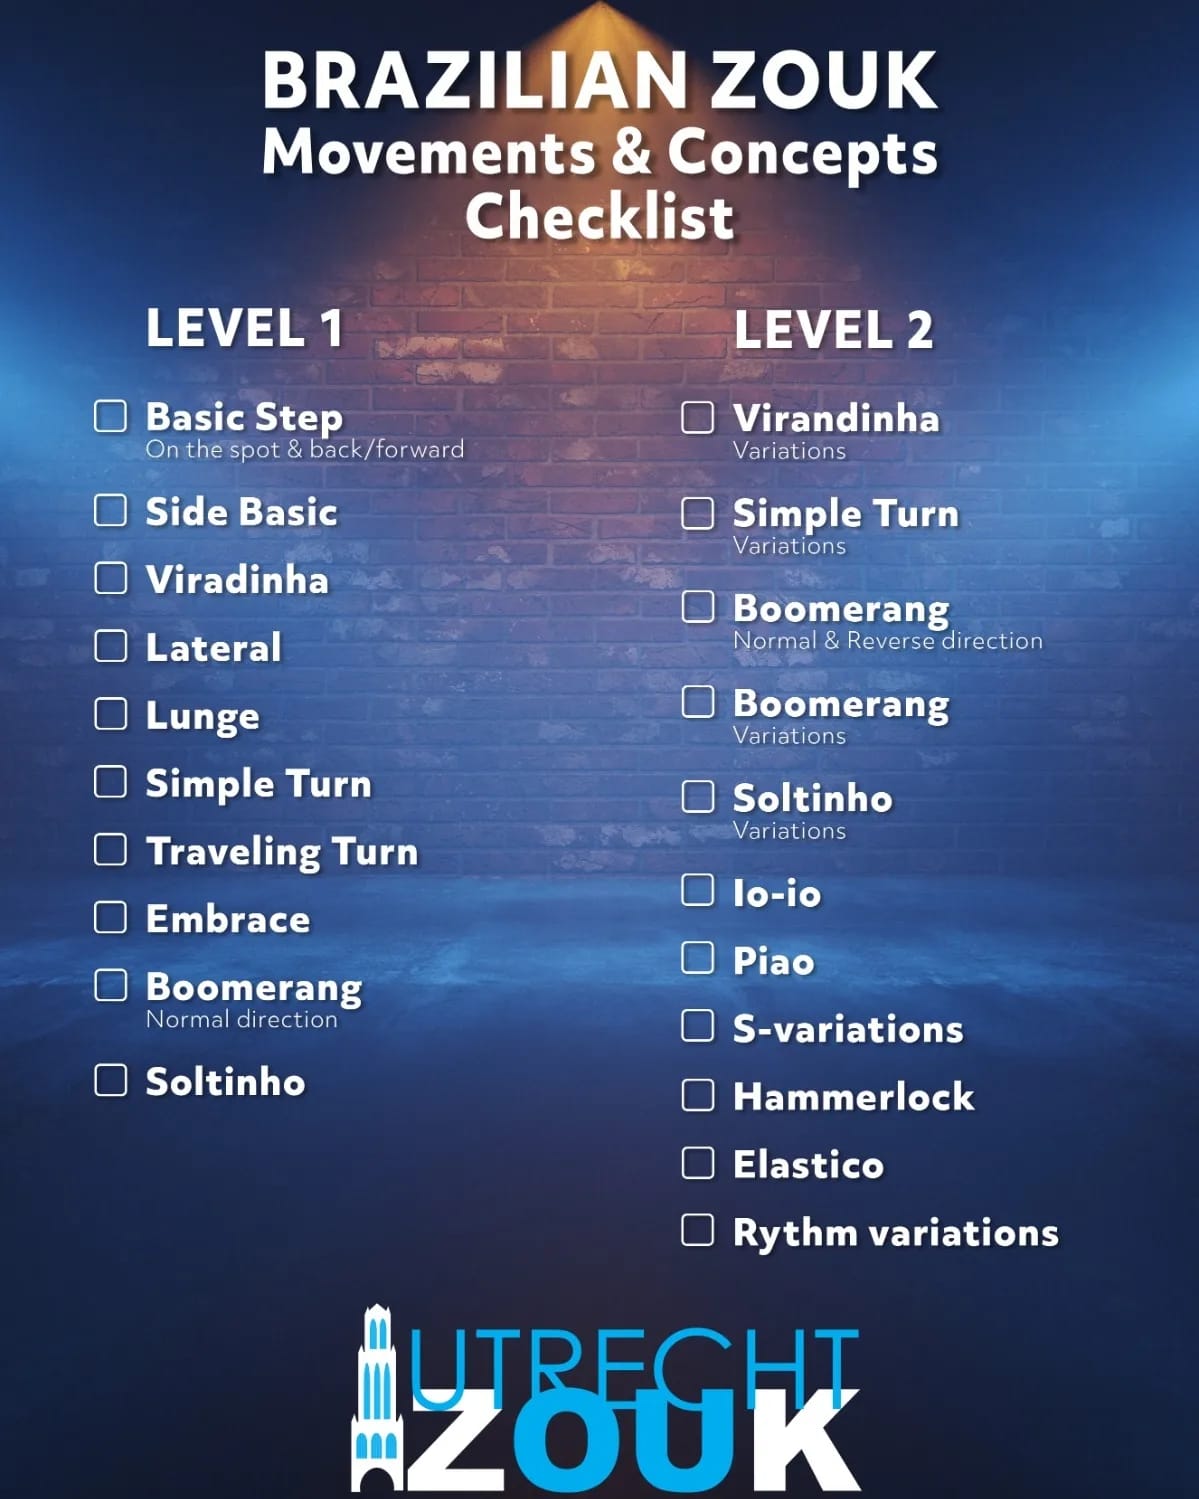 Brazilian-zouk-movements-and-concepts-checklist-level-1-and-2